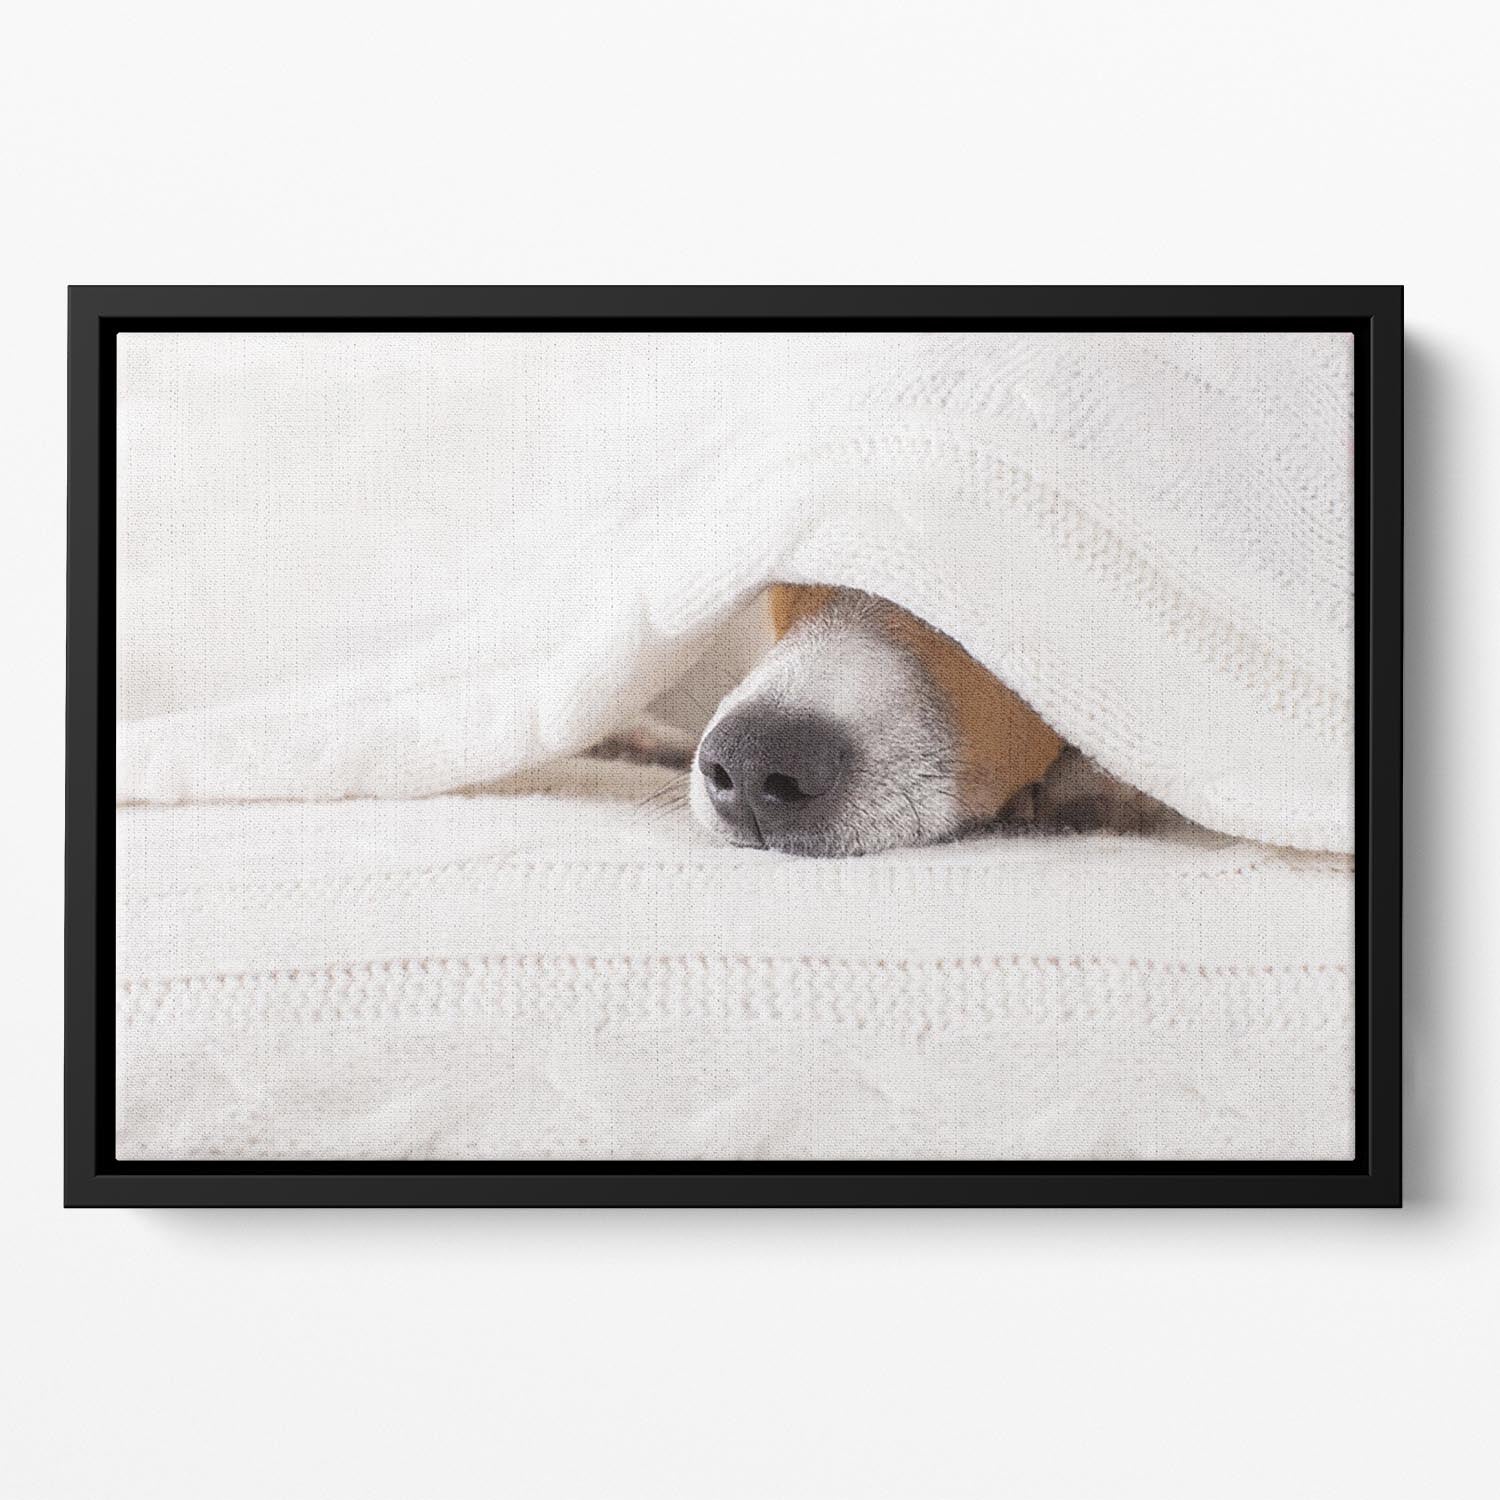 Jack russell dog sleeping under the blanket Floating Framed Canvas - Canvas Art Rocks - 2